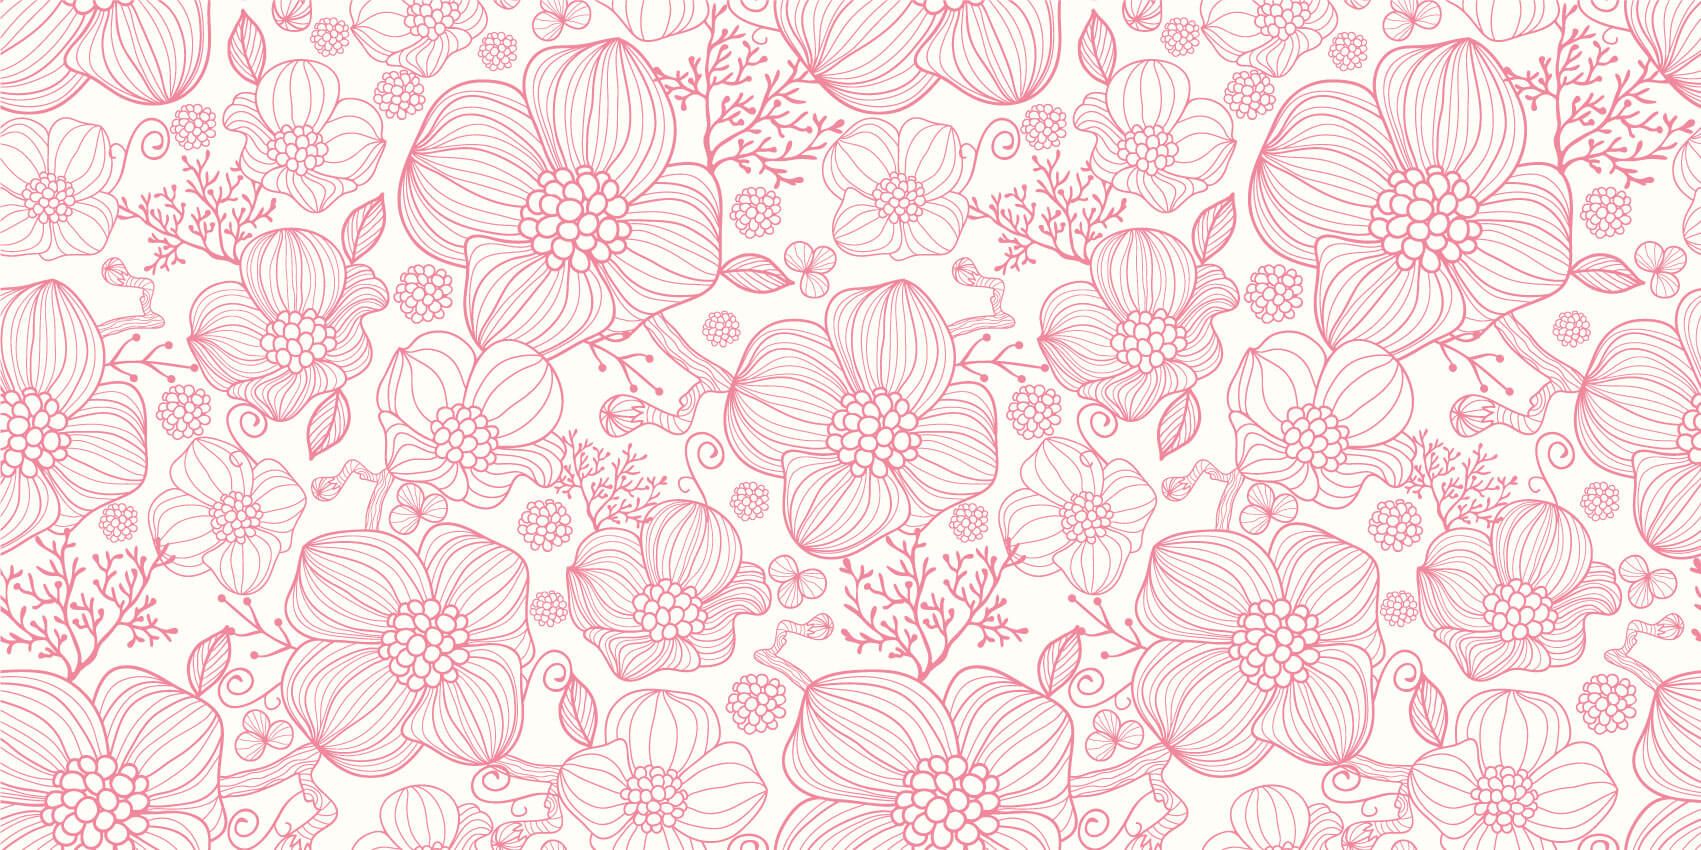 Patterns for Kidsroom - Grote roze bloemen - Slaapkamer